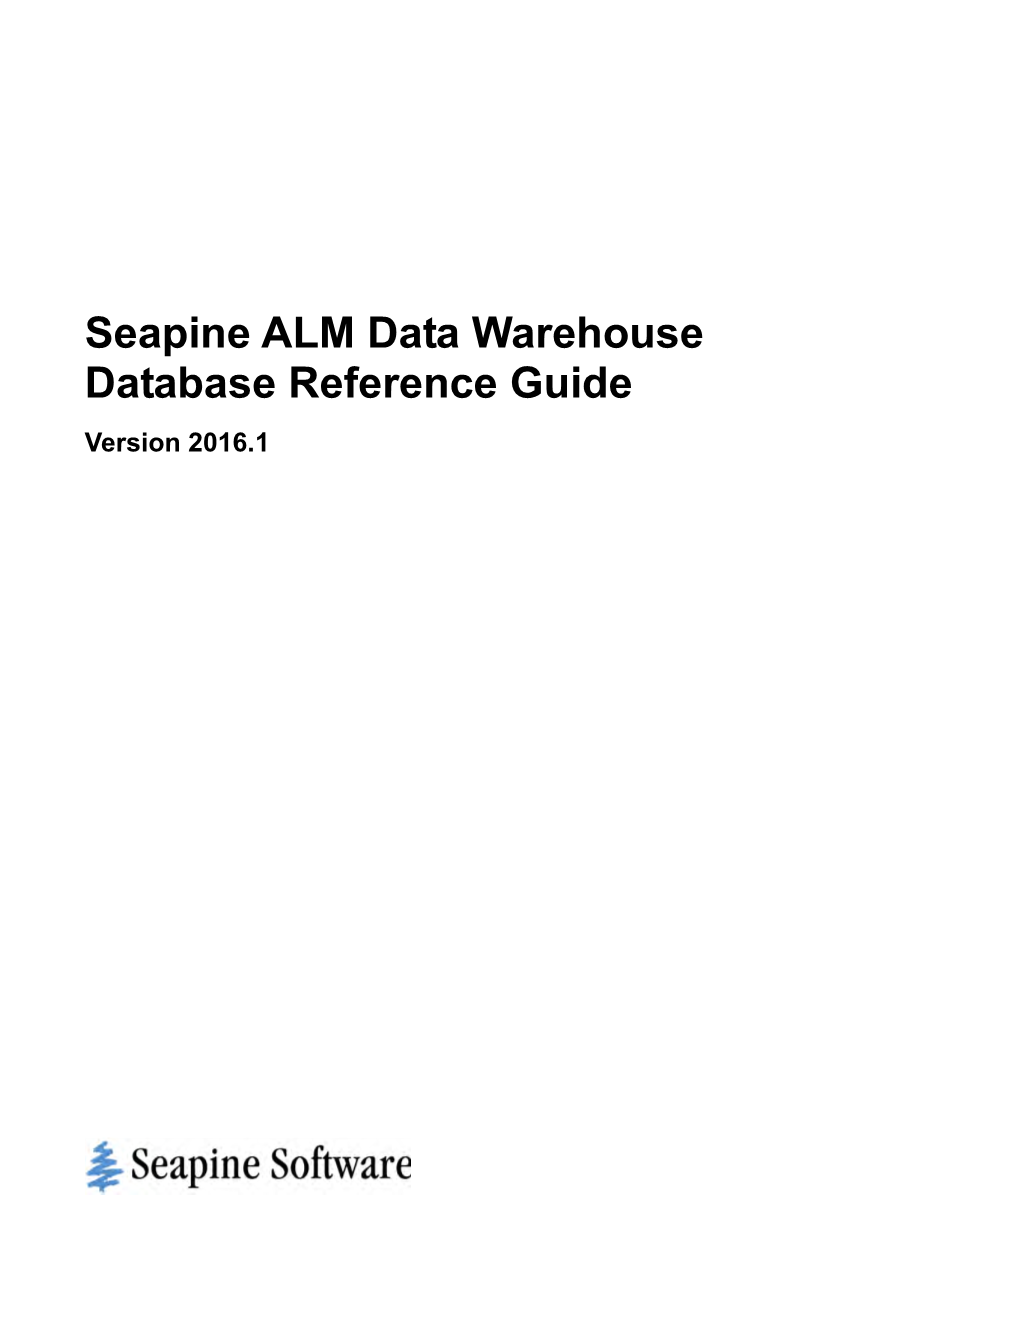 Seapine ALM Reporting Platform Database Reference Guide V2016.1